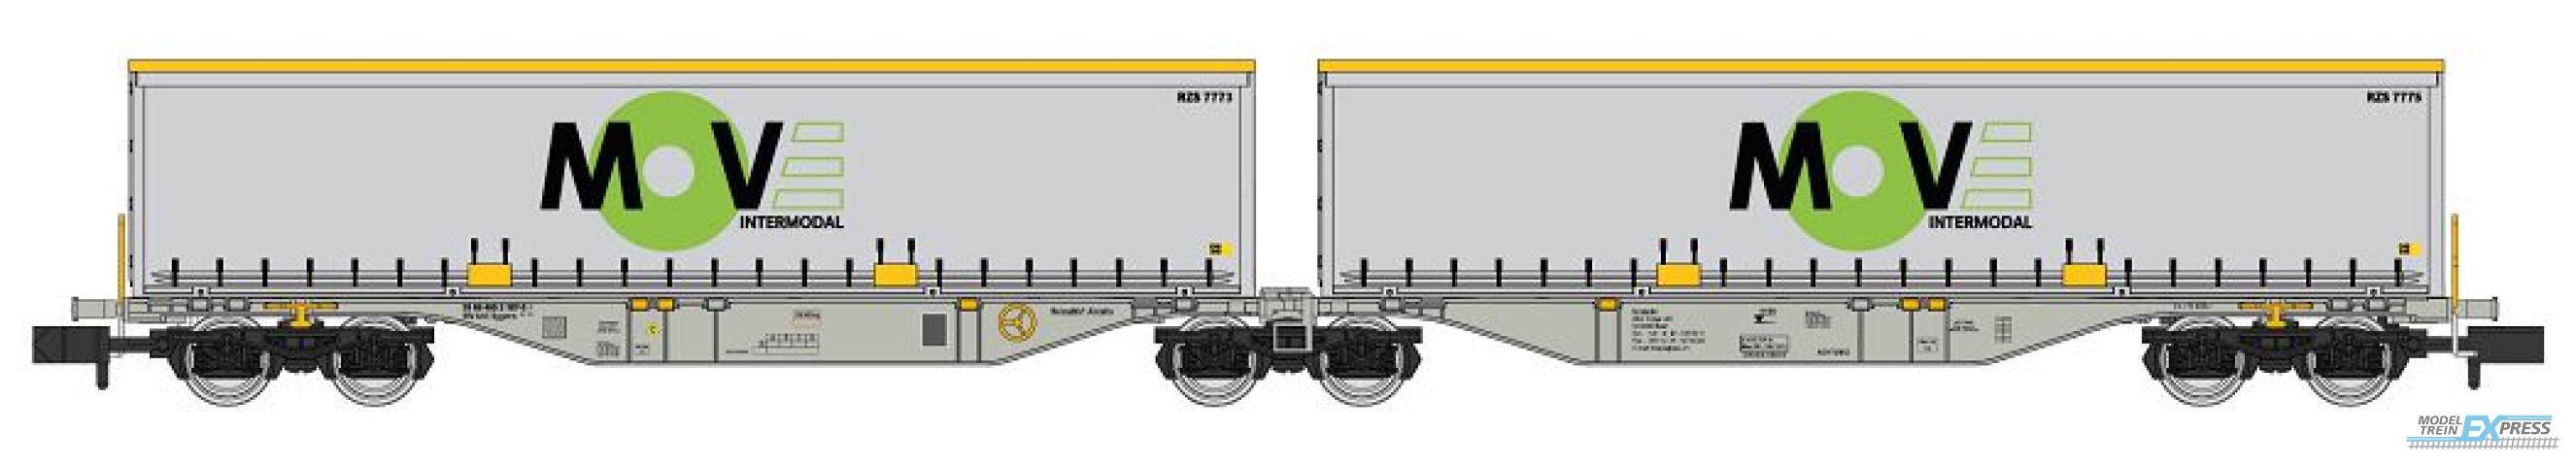 REE models NW-209 Sggmrss 90 wagon TOUAX + 2 Swap bodies "MOVE INERNATIONAL" - Era V-VI